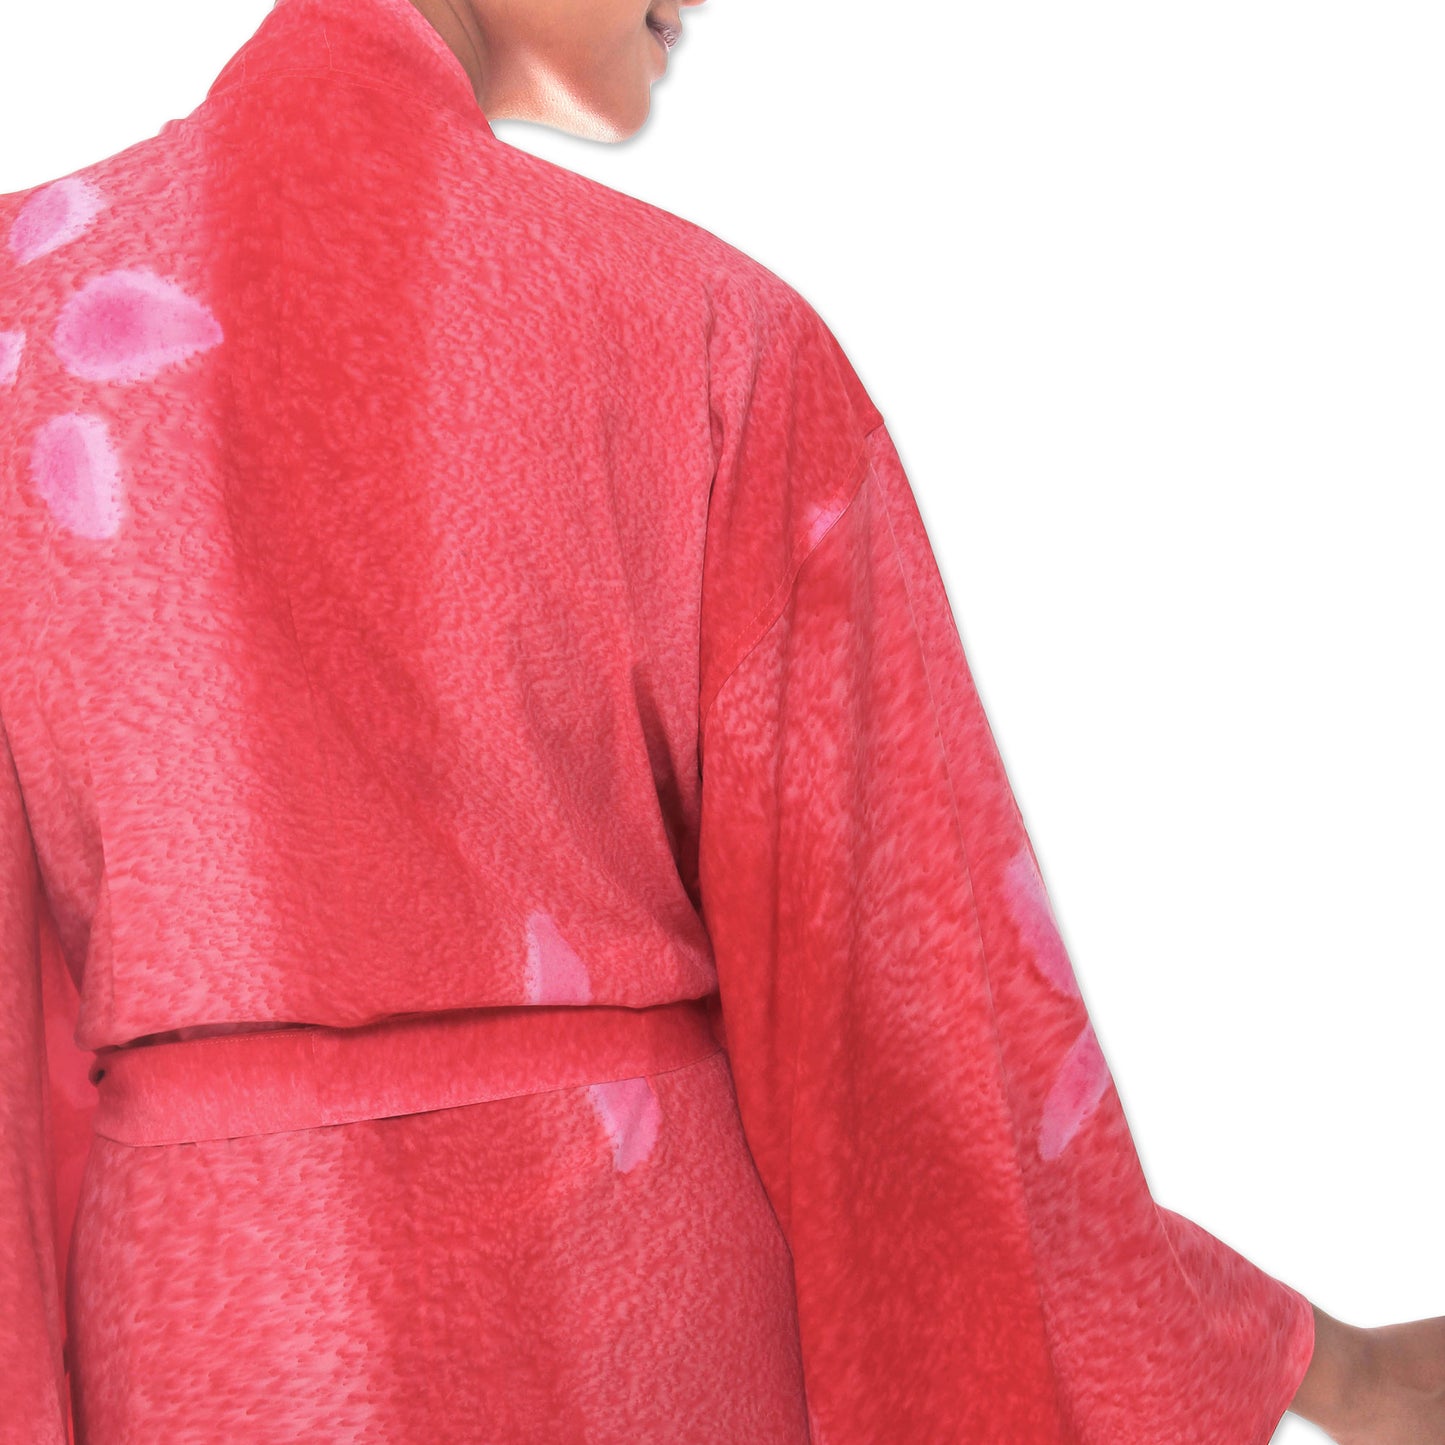 Kissed by Crimson Fair Trade Batik Robe